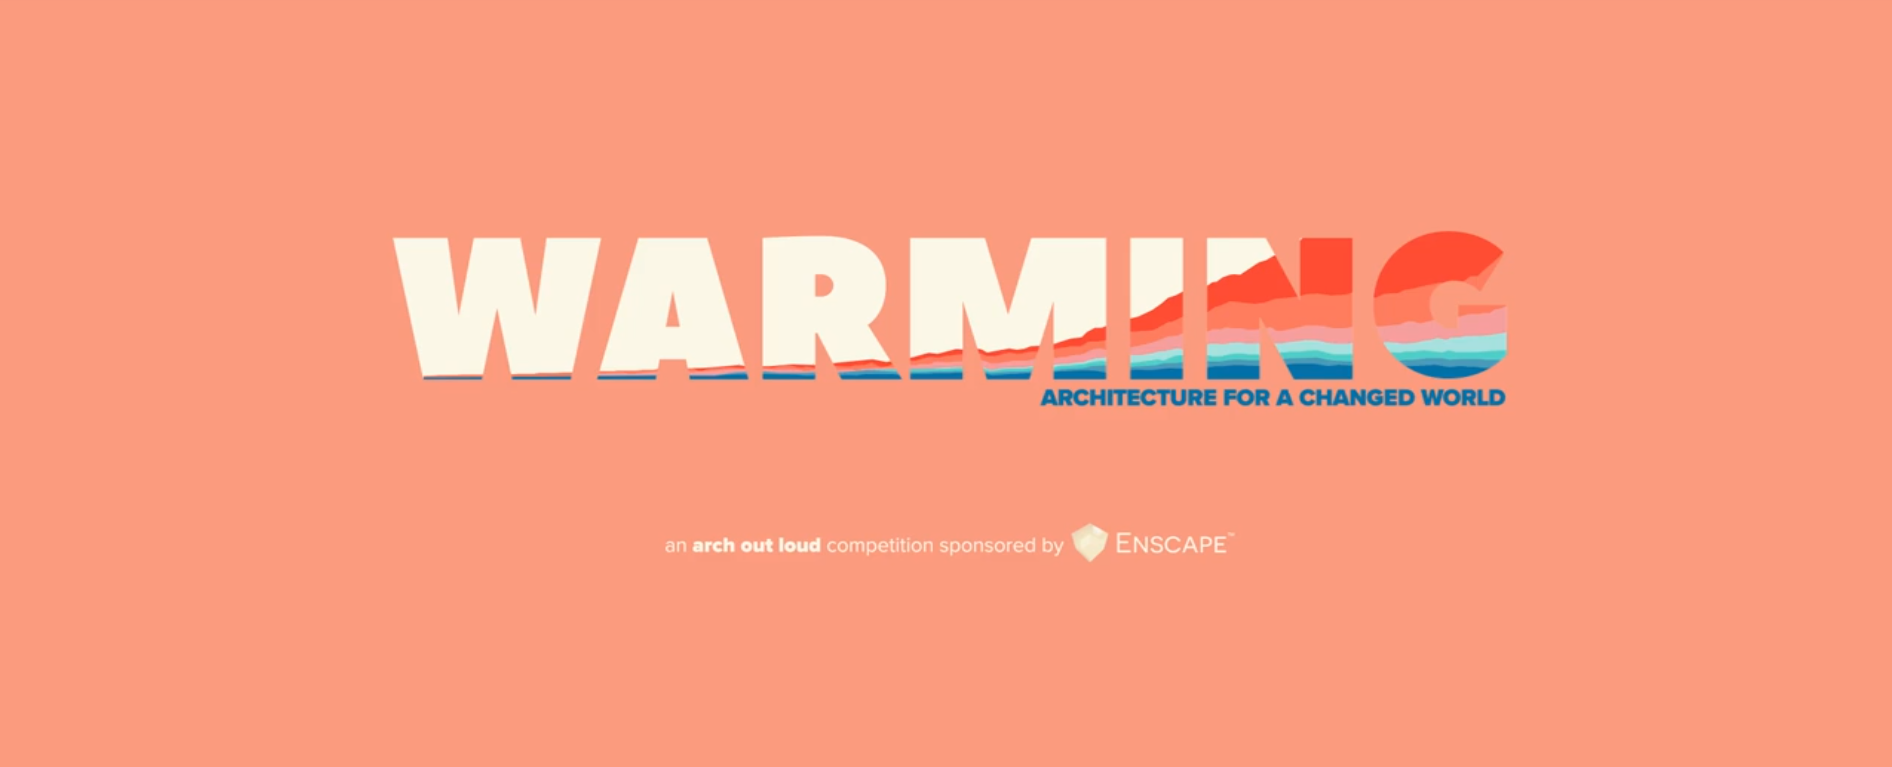 WARMING—应对全球变暖建筑竞赛